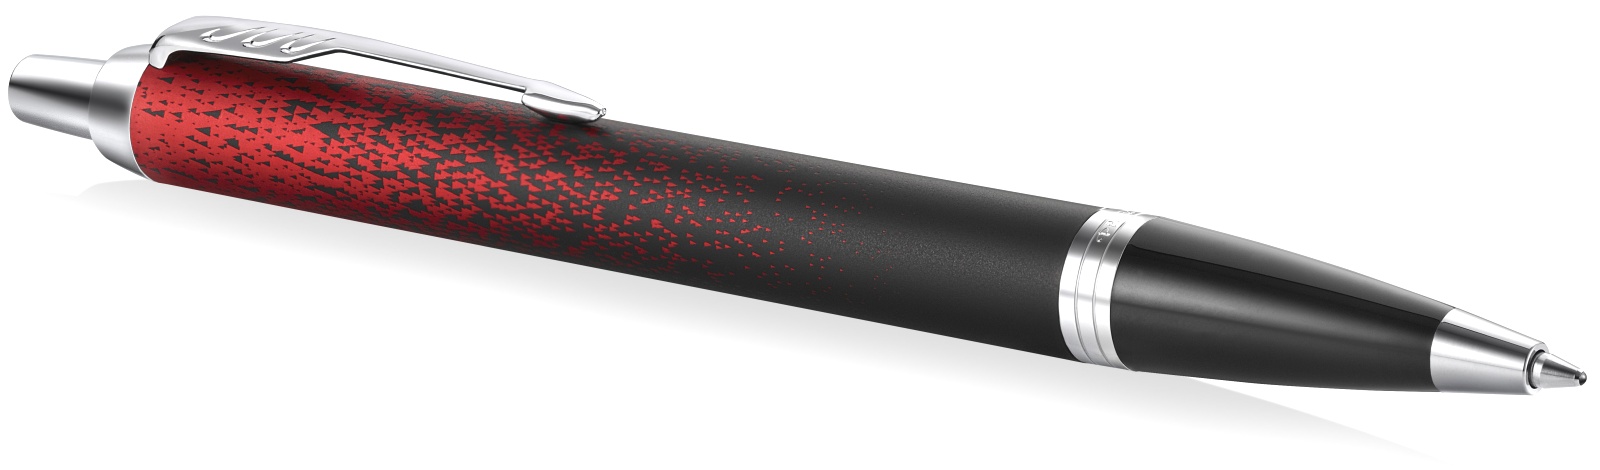  Ручка шариковая Parker IM Core 2019 SE K320, Red Ignite, фото 2